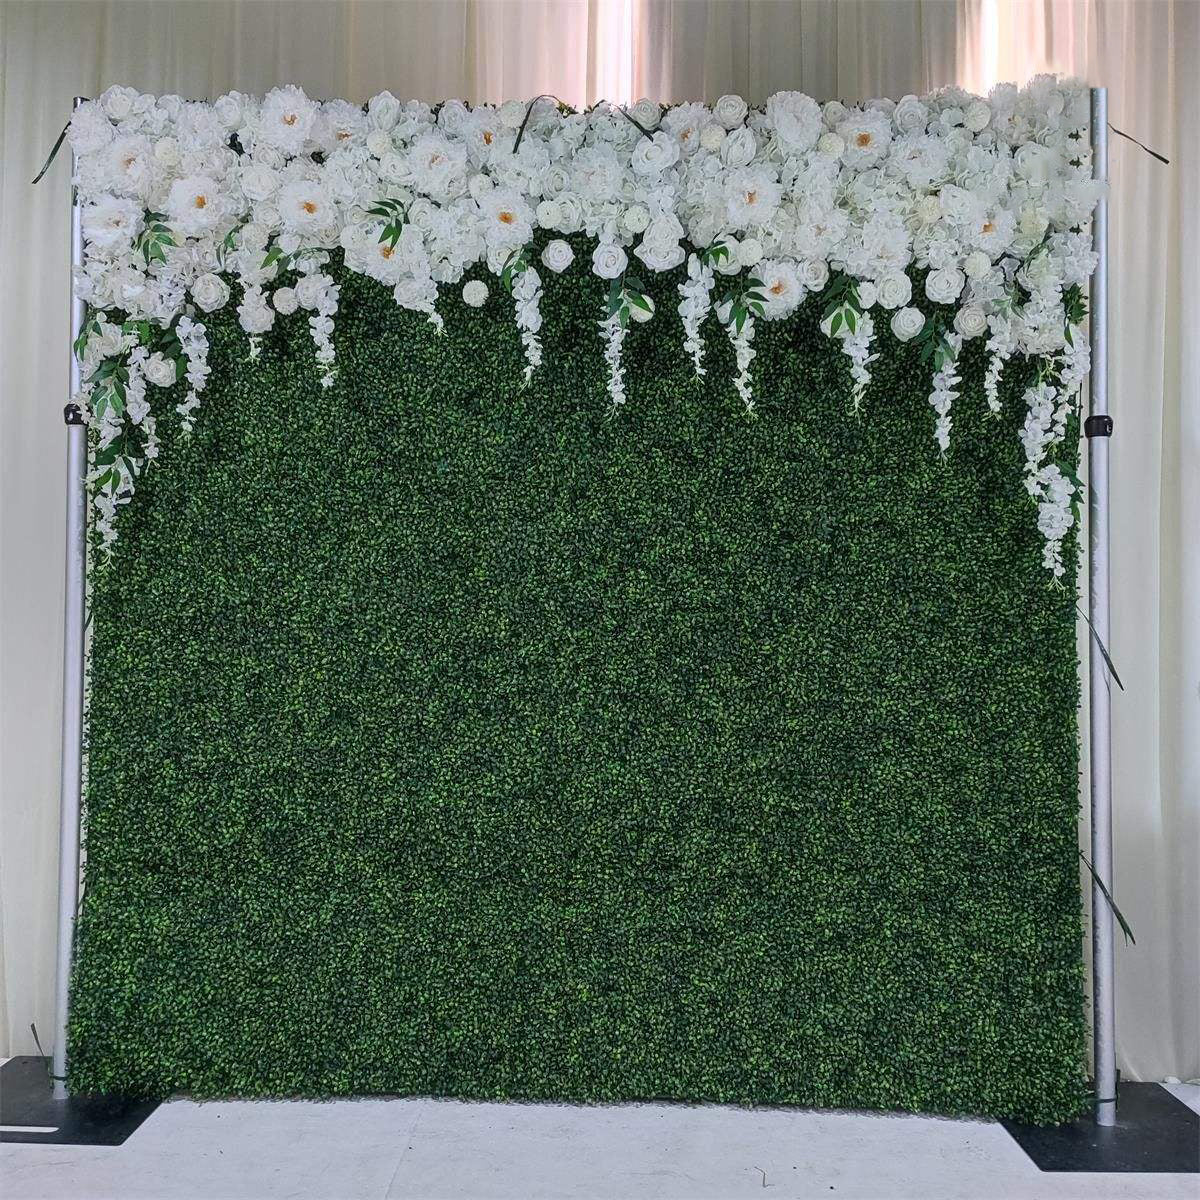 3D Artificial Flower Wall Arrangement Wedding Party Birthday Backdrop Decor HQ3810